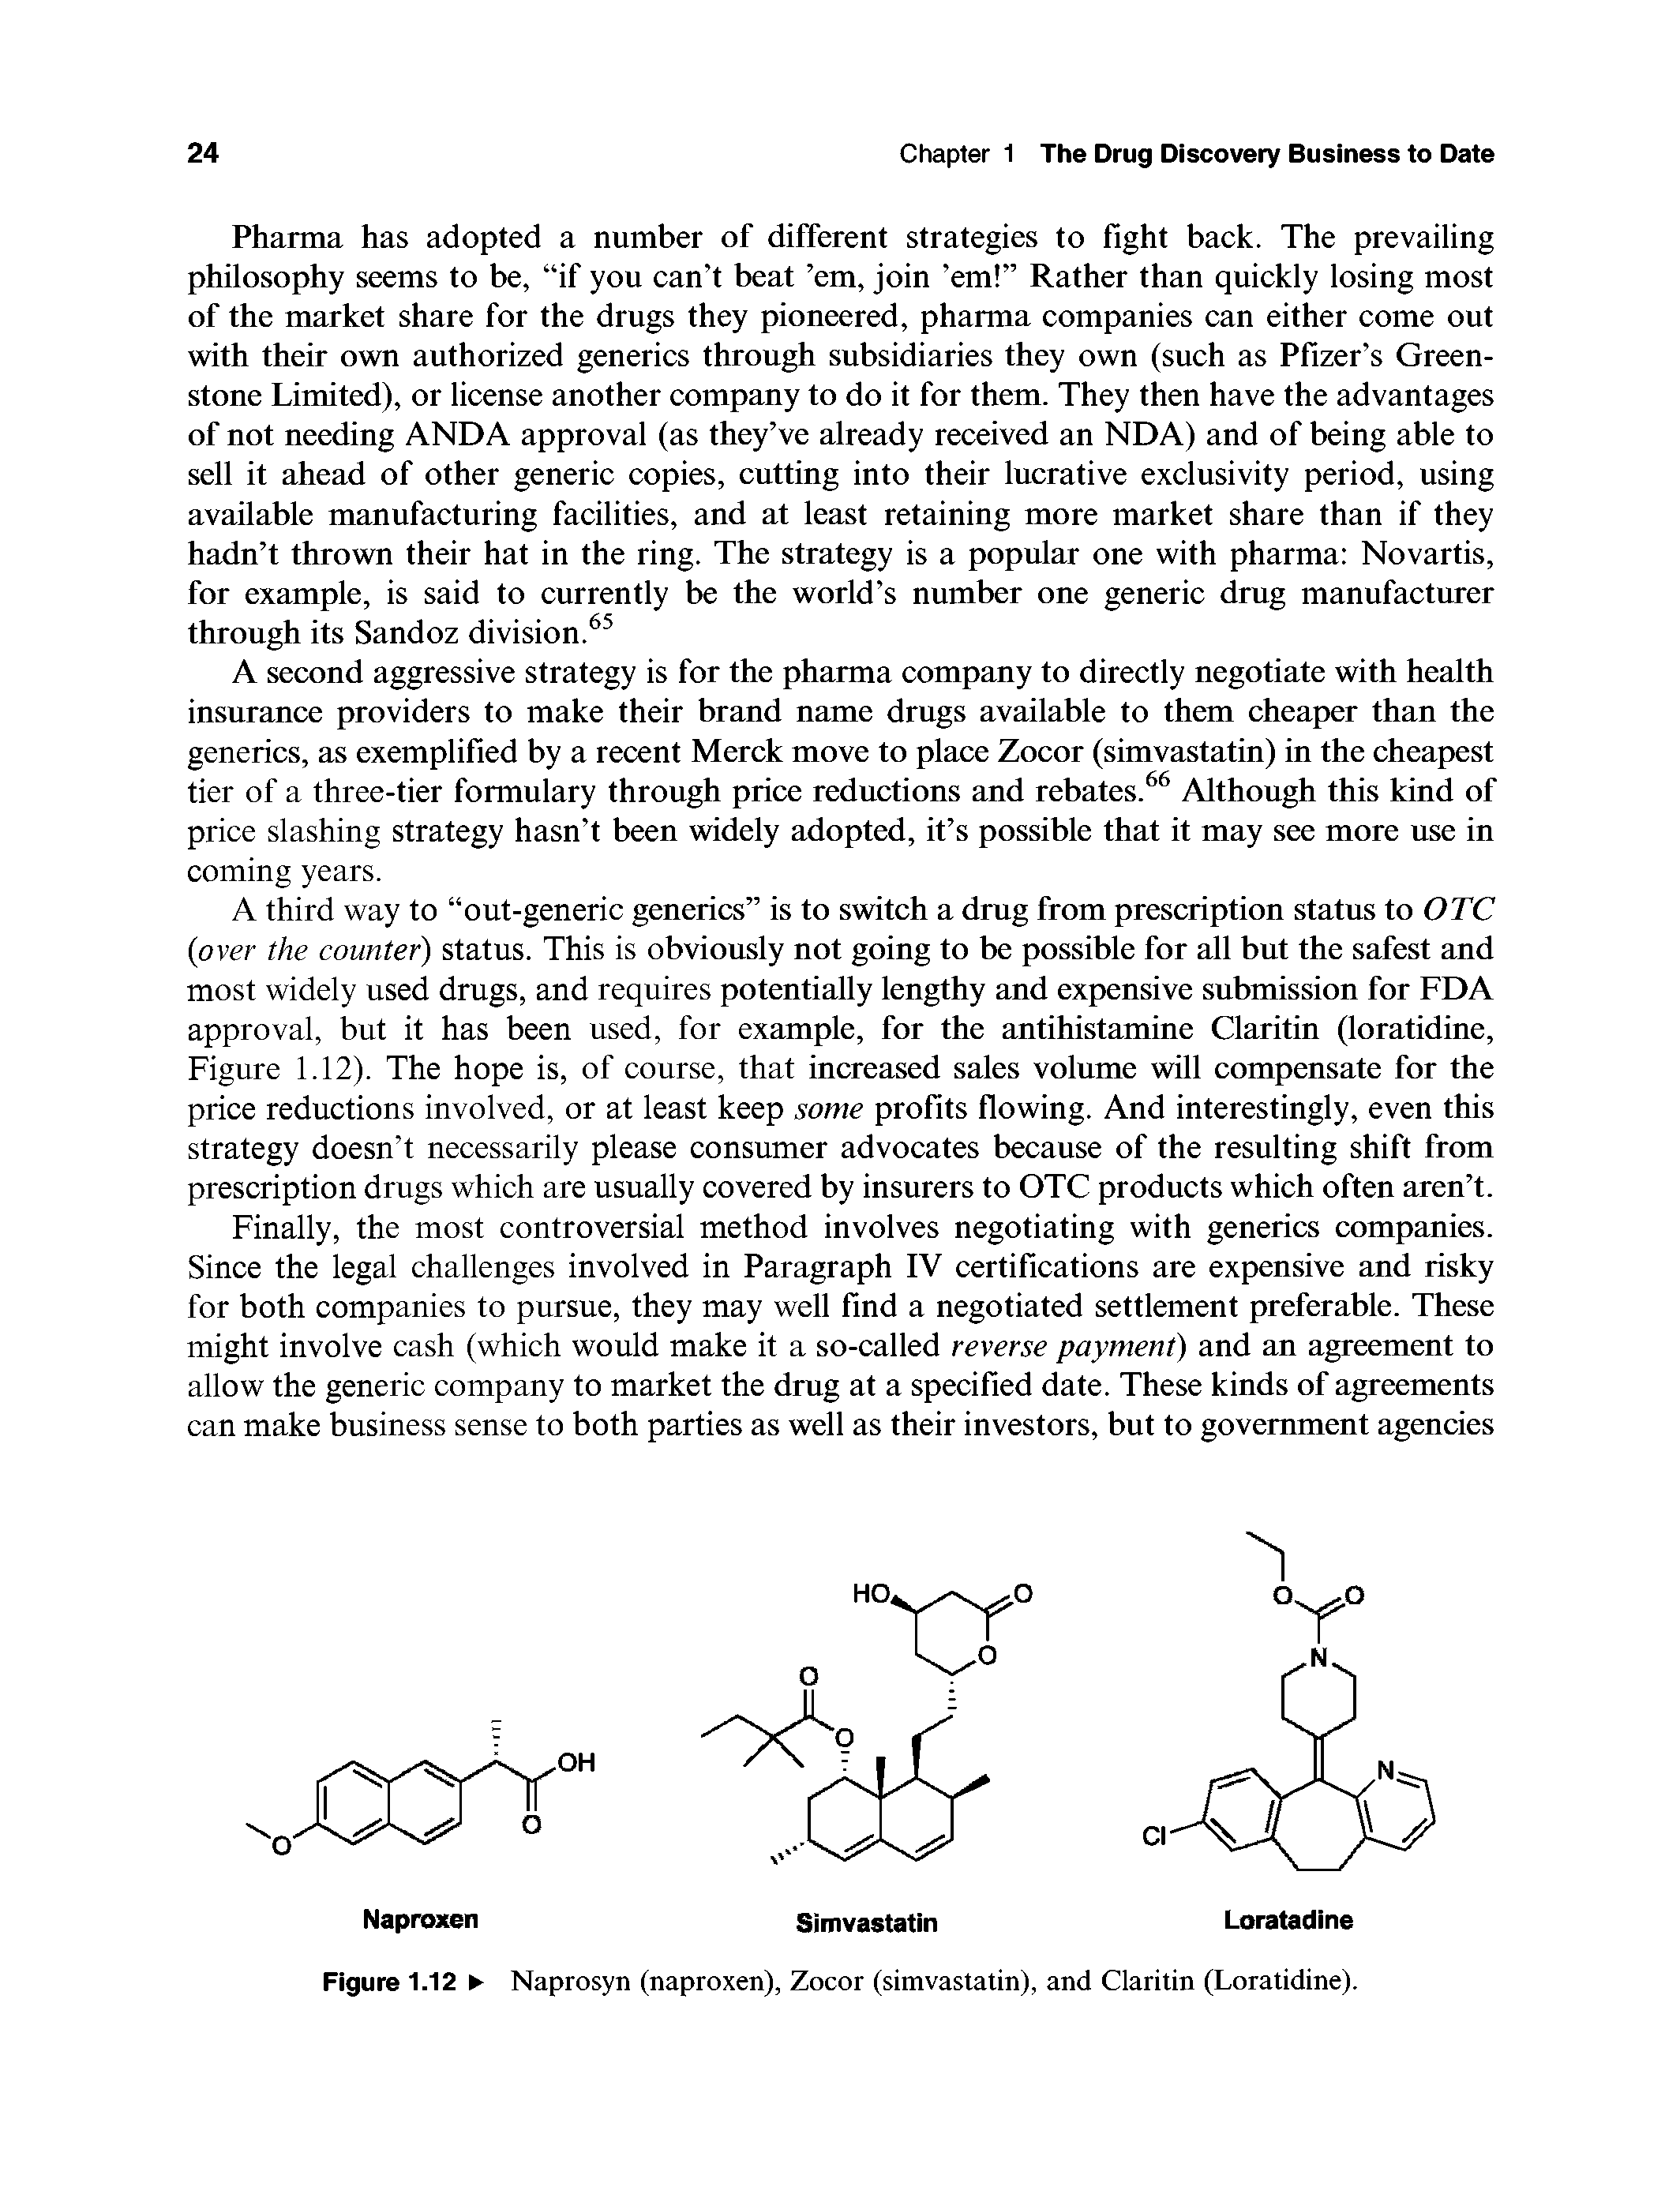 Figure 1.12 Naprosyn (naproxen), Zocor (simvastatin), and Claritin (Loratidine).